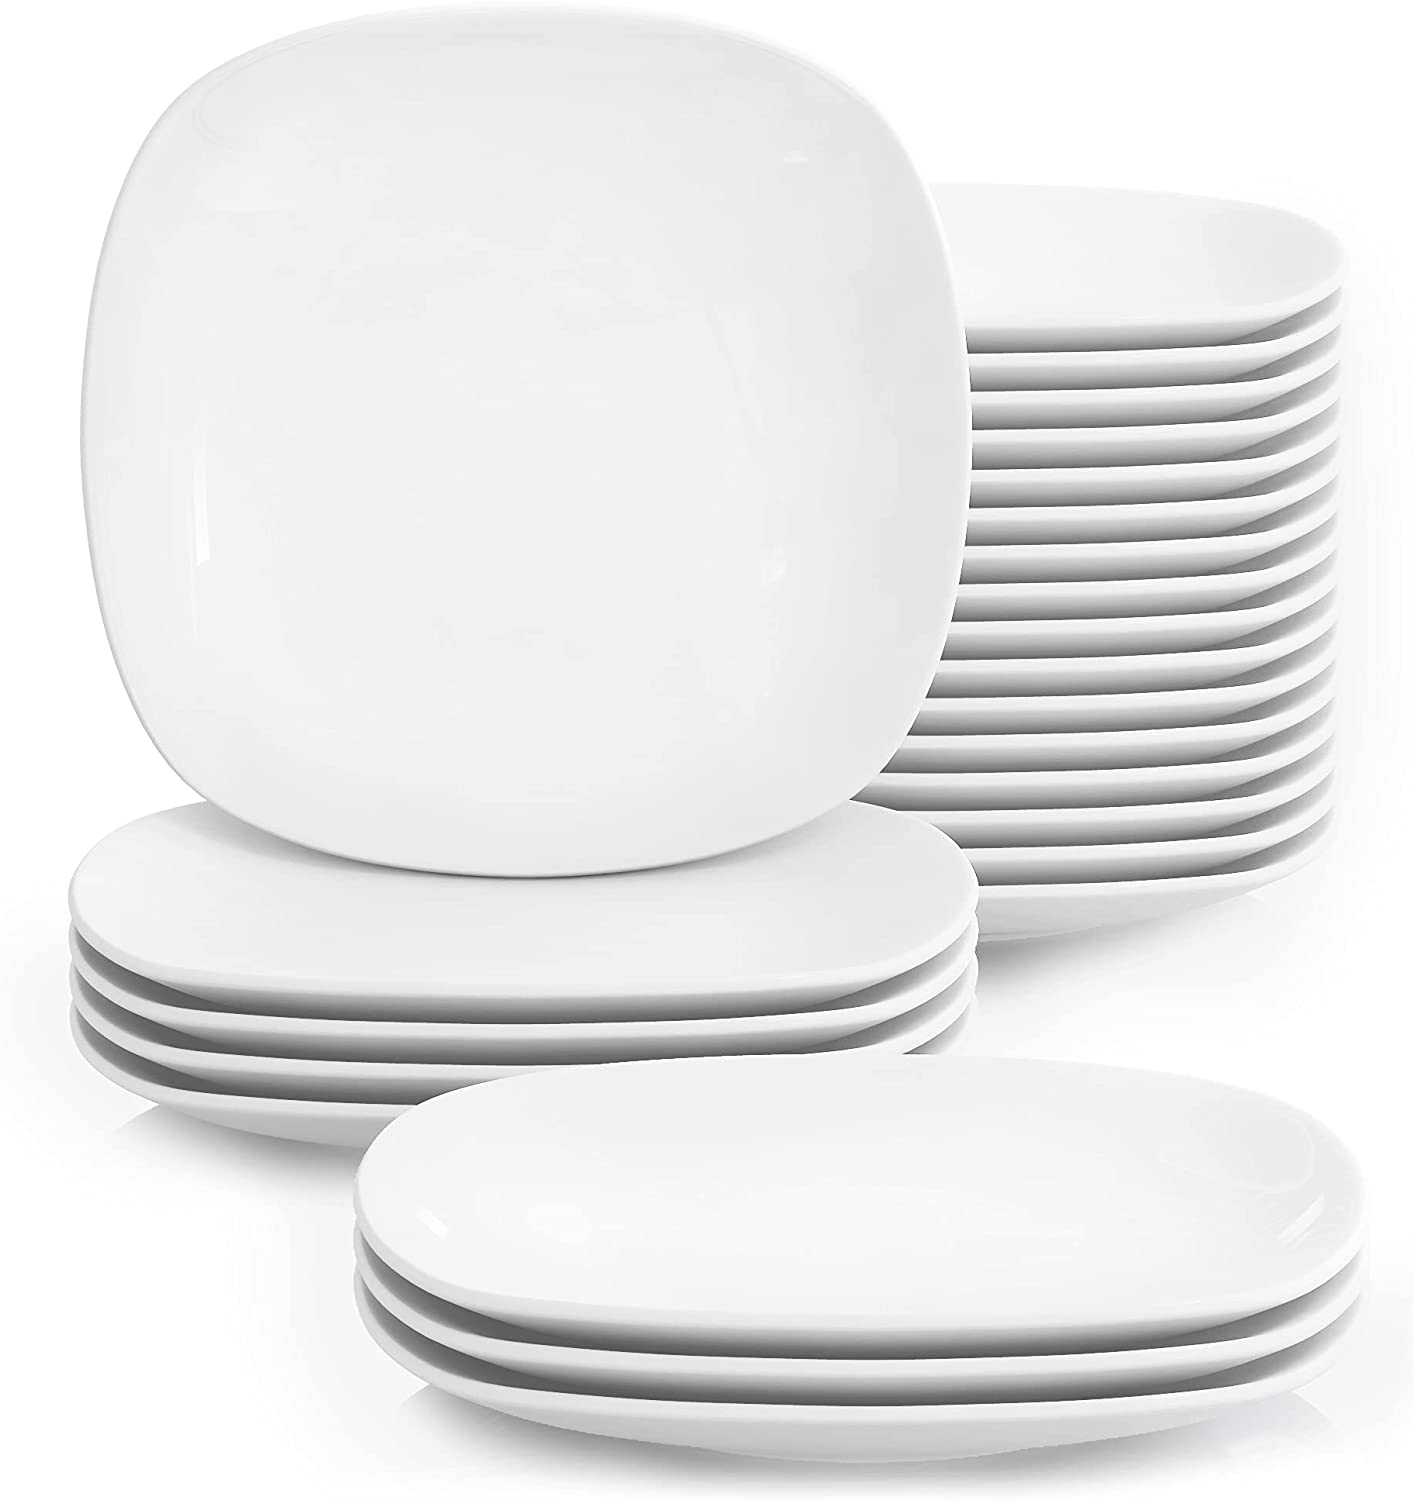 \'Malacasa Series Elisa, Set of 24 Porcelain Plate 9.75 Cream Dinner Plate Large Flat Bowls 24,6x24,6x2,5 cm Tableware for 24 People